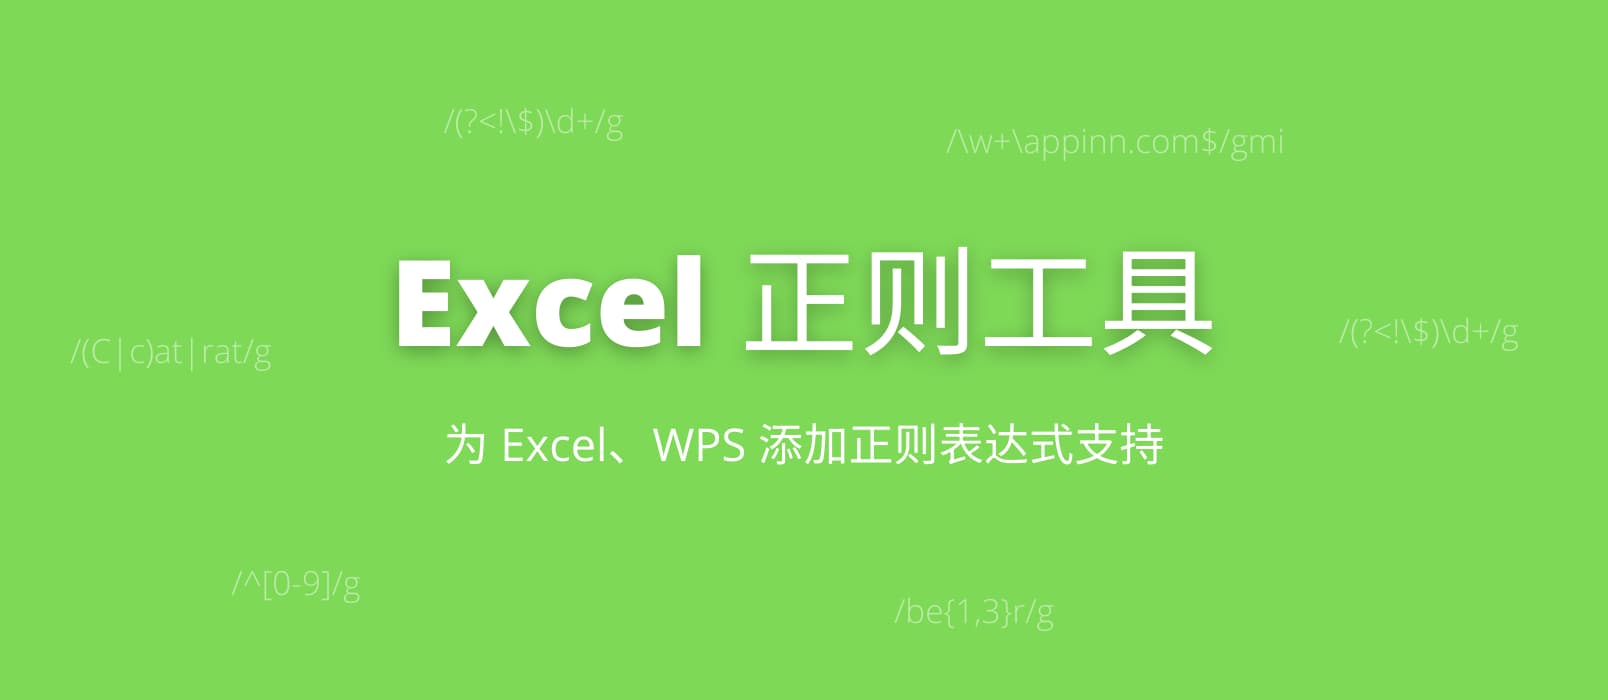 Excel正则工具 - 为 Excel、WPS  添加正则表达式支持[Windows]